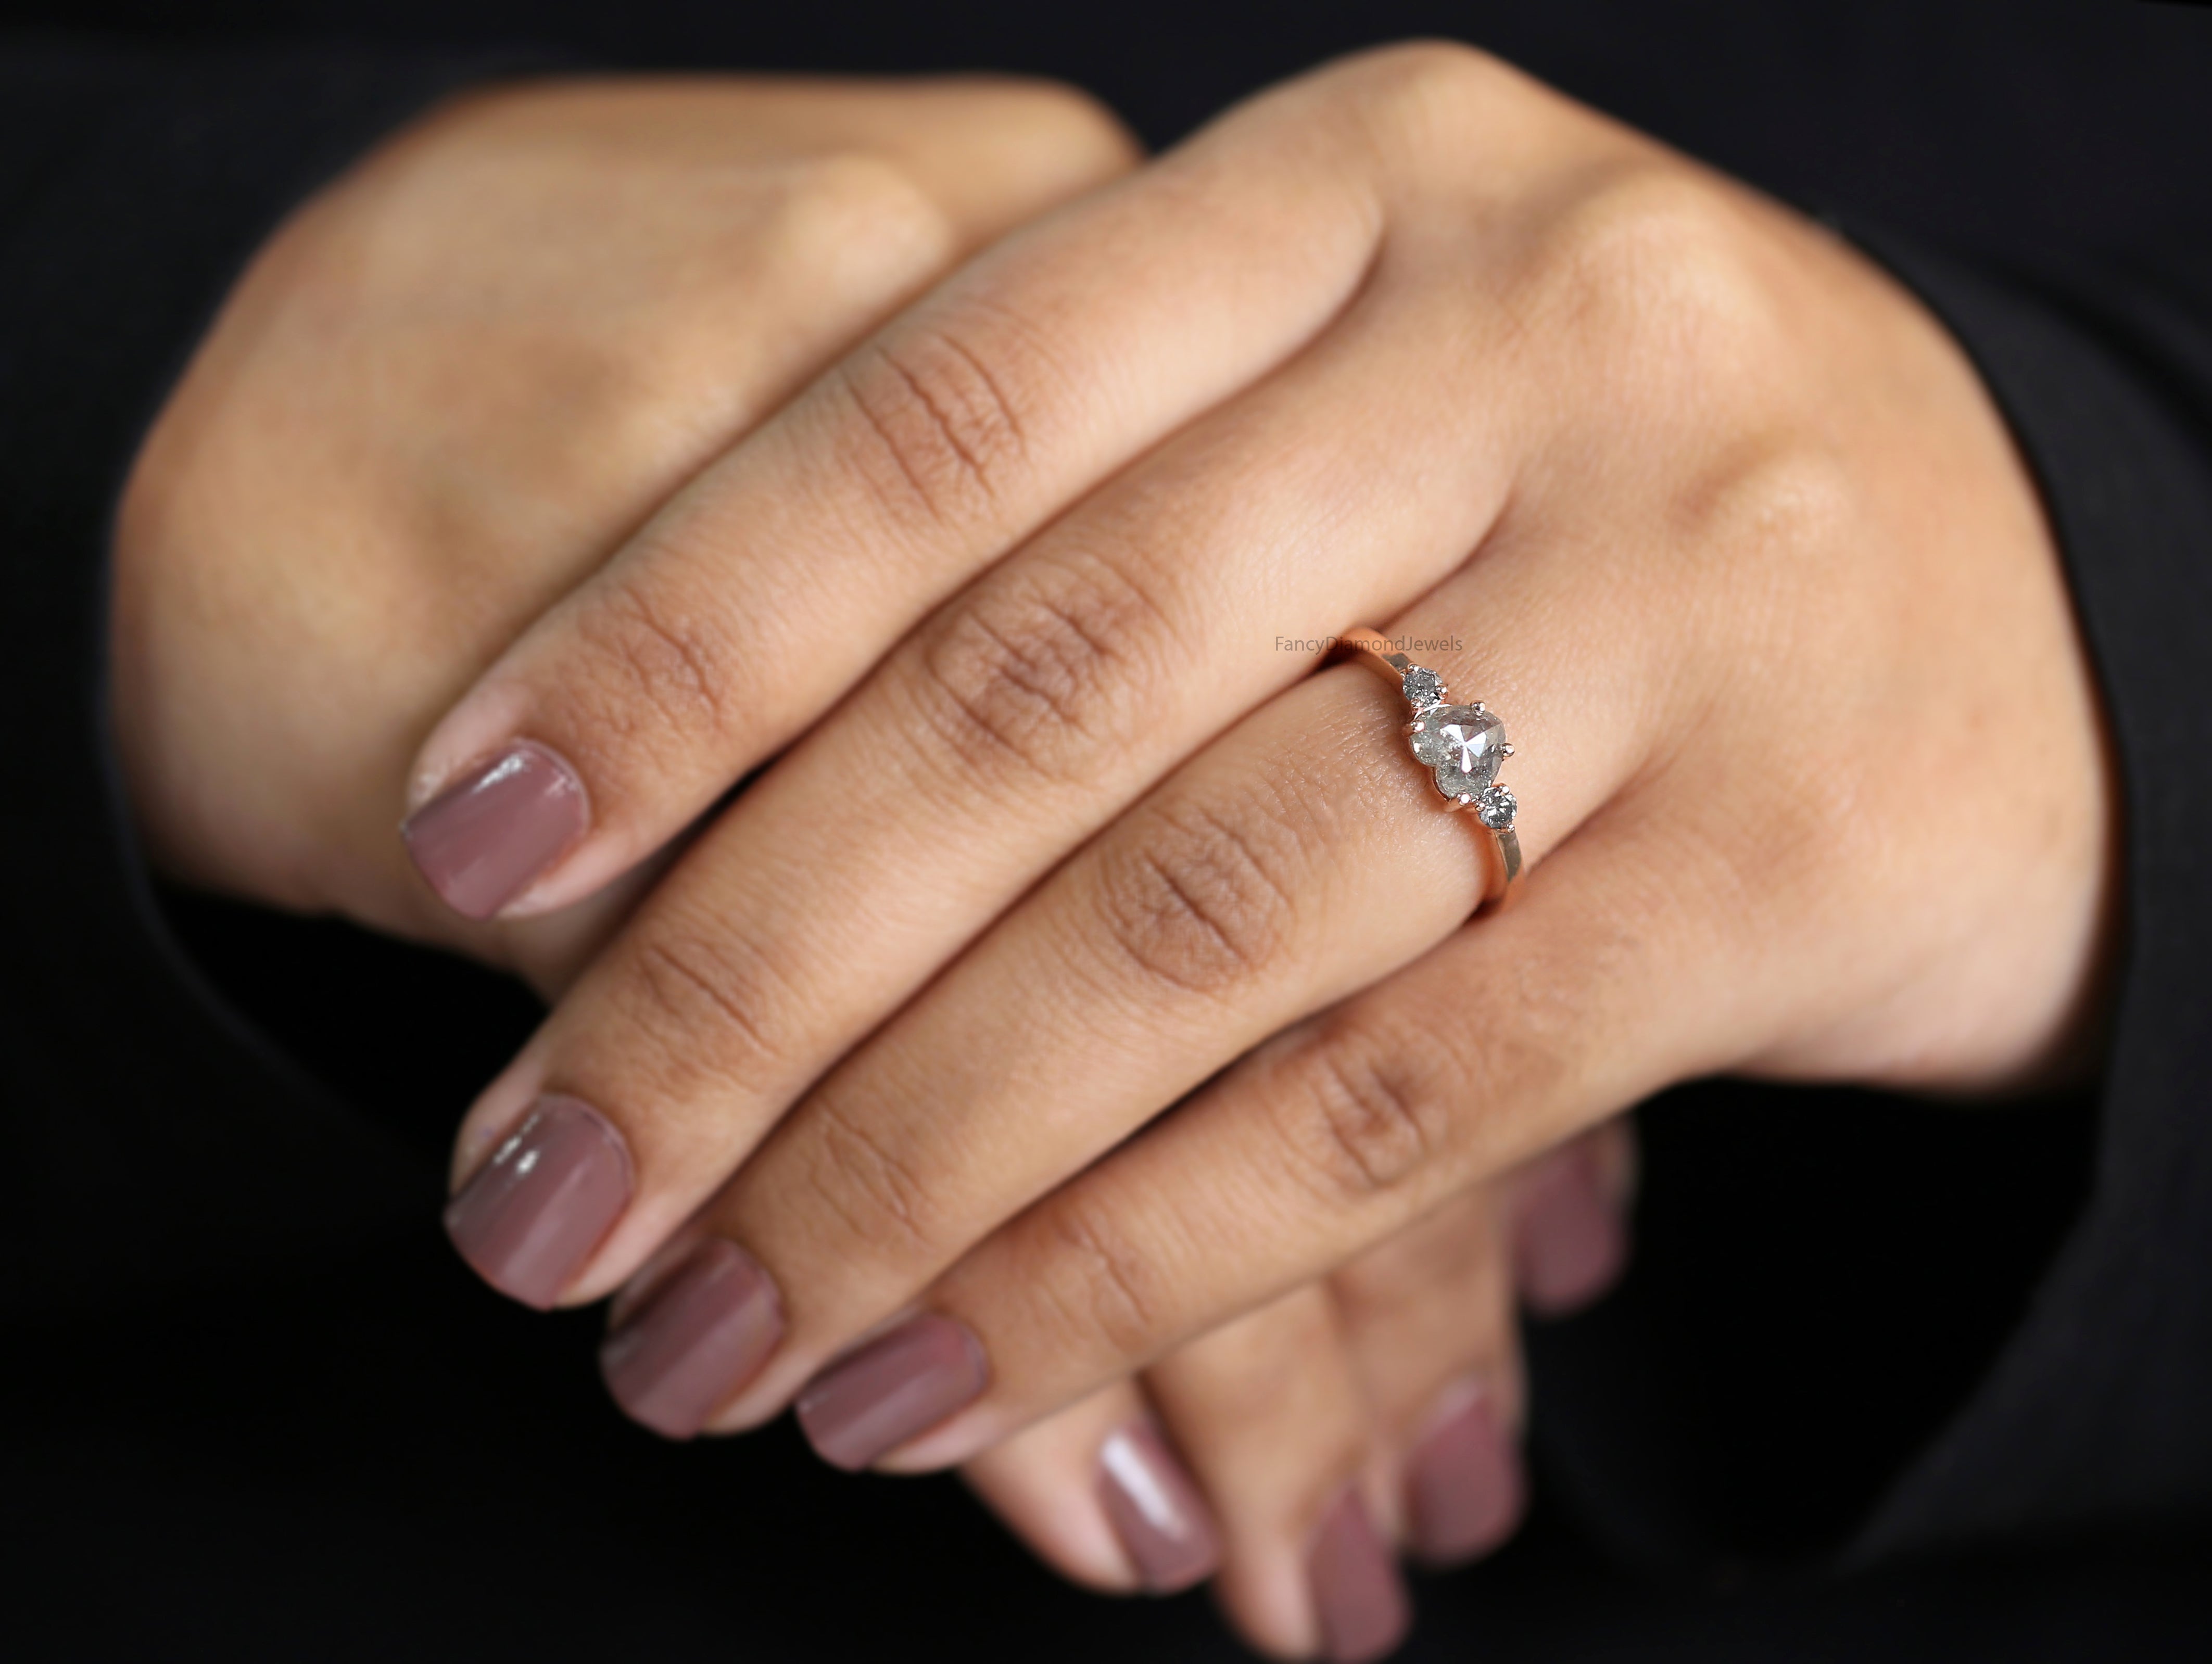 Heart Salt And Pepper Diamond Ring 0.69 Ct 5.60 MM Heart Shape Diamond Ring 14K Solid Rose Gold Silver Engagement Ring Gift For Her QL1624